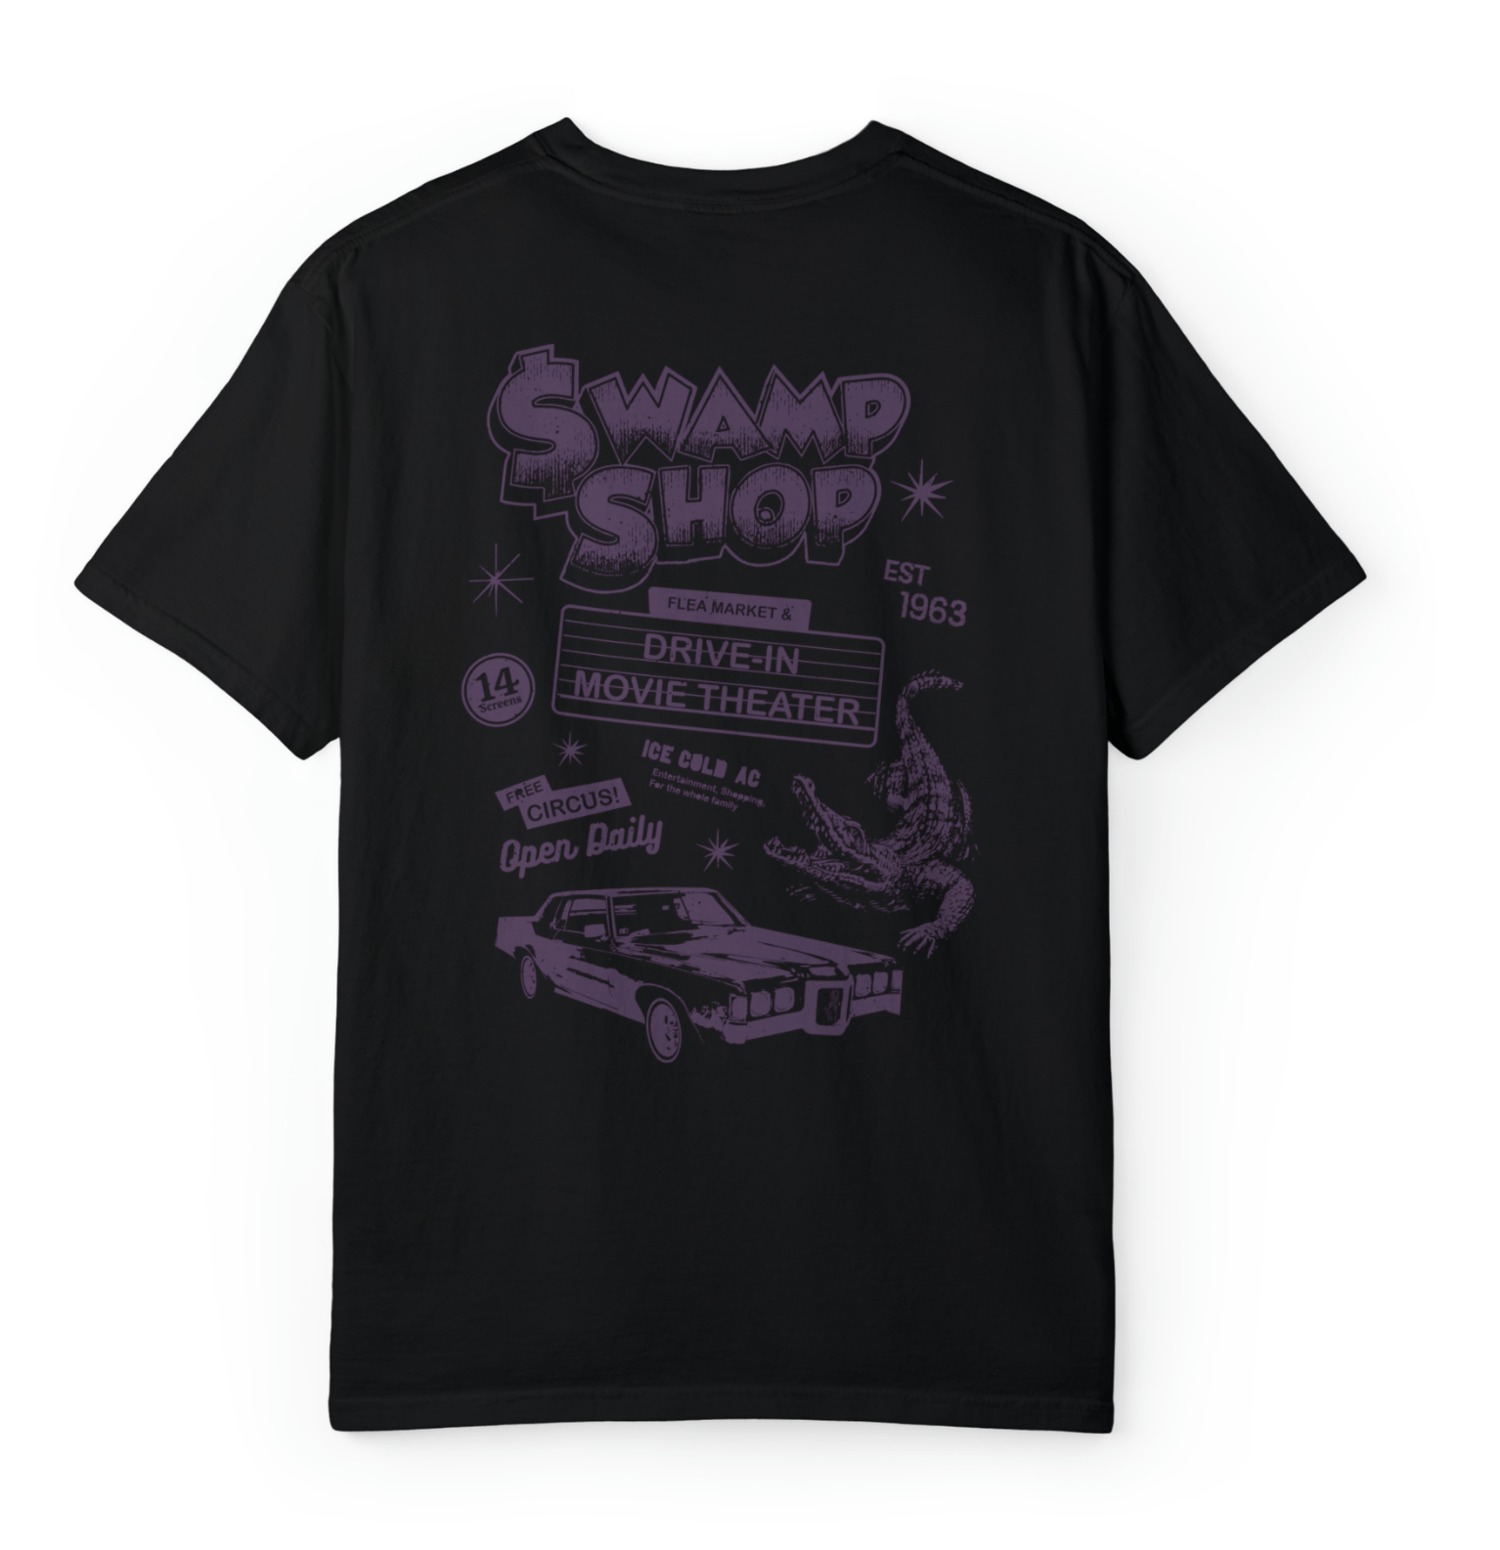 The Swamp Shop